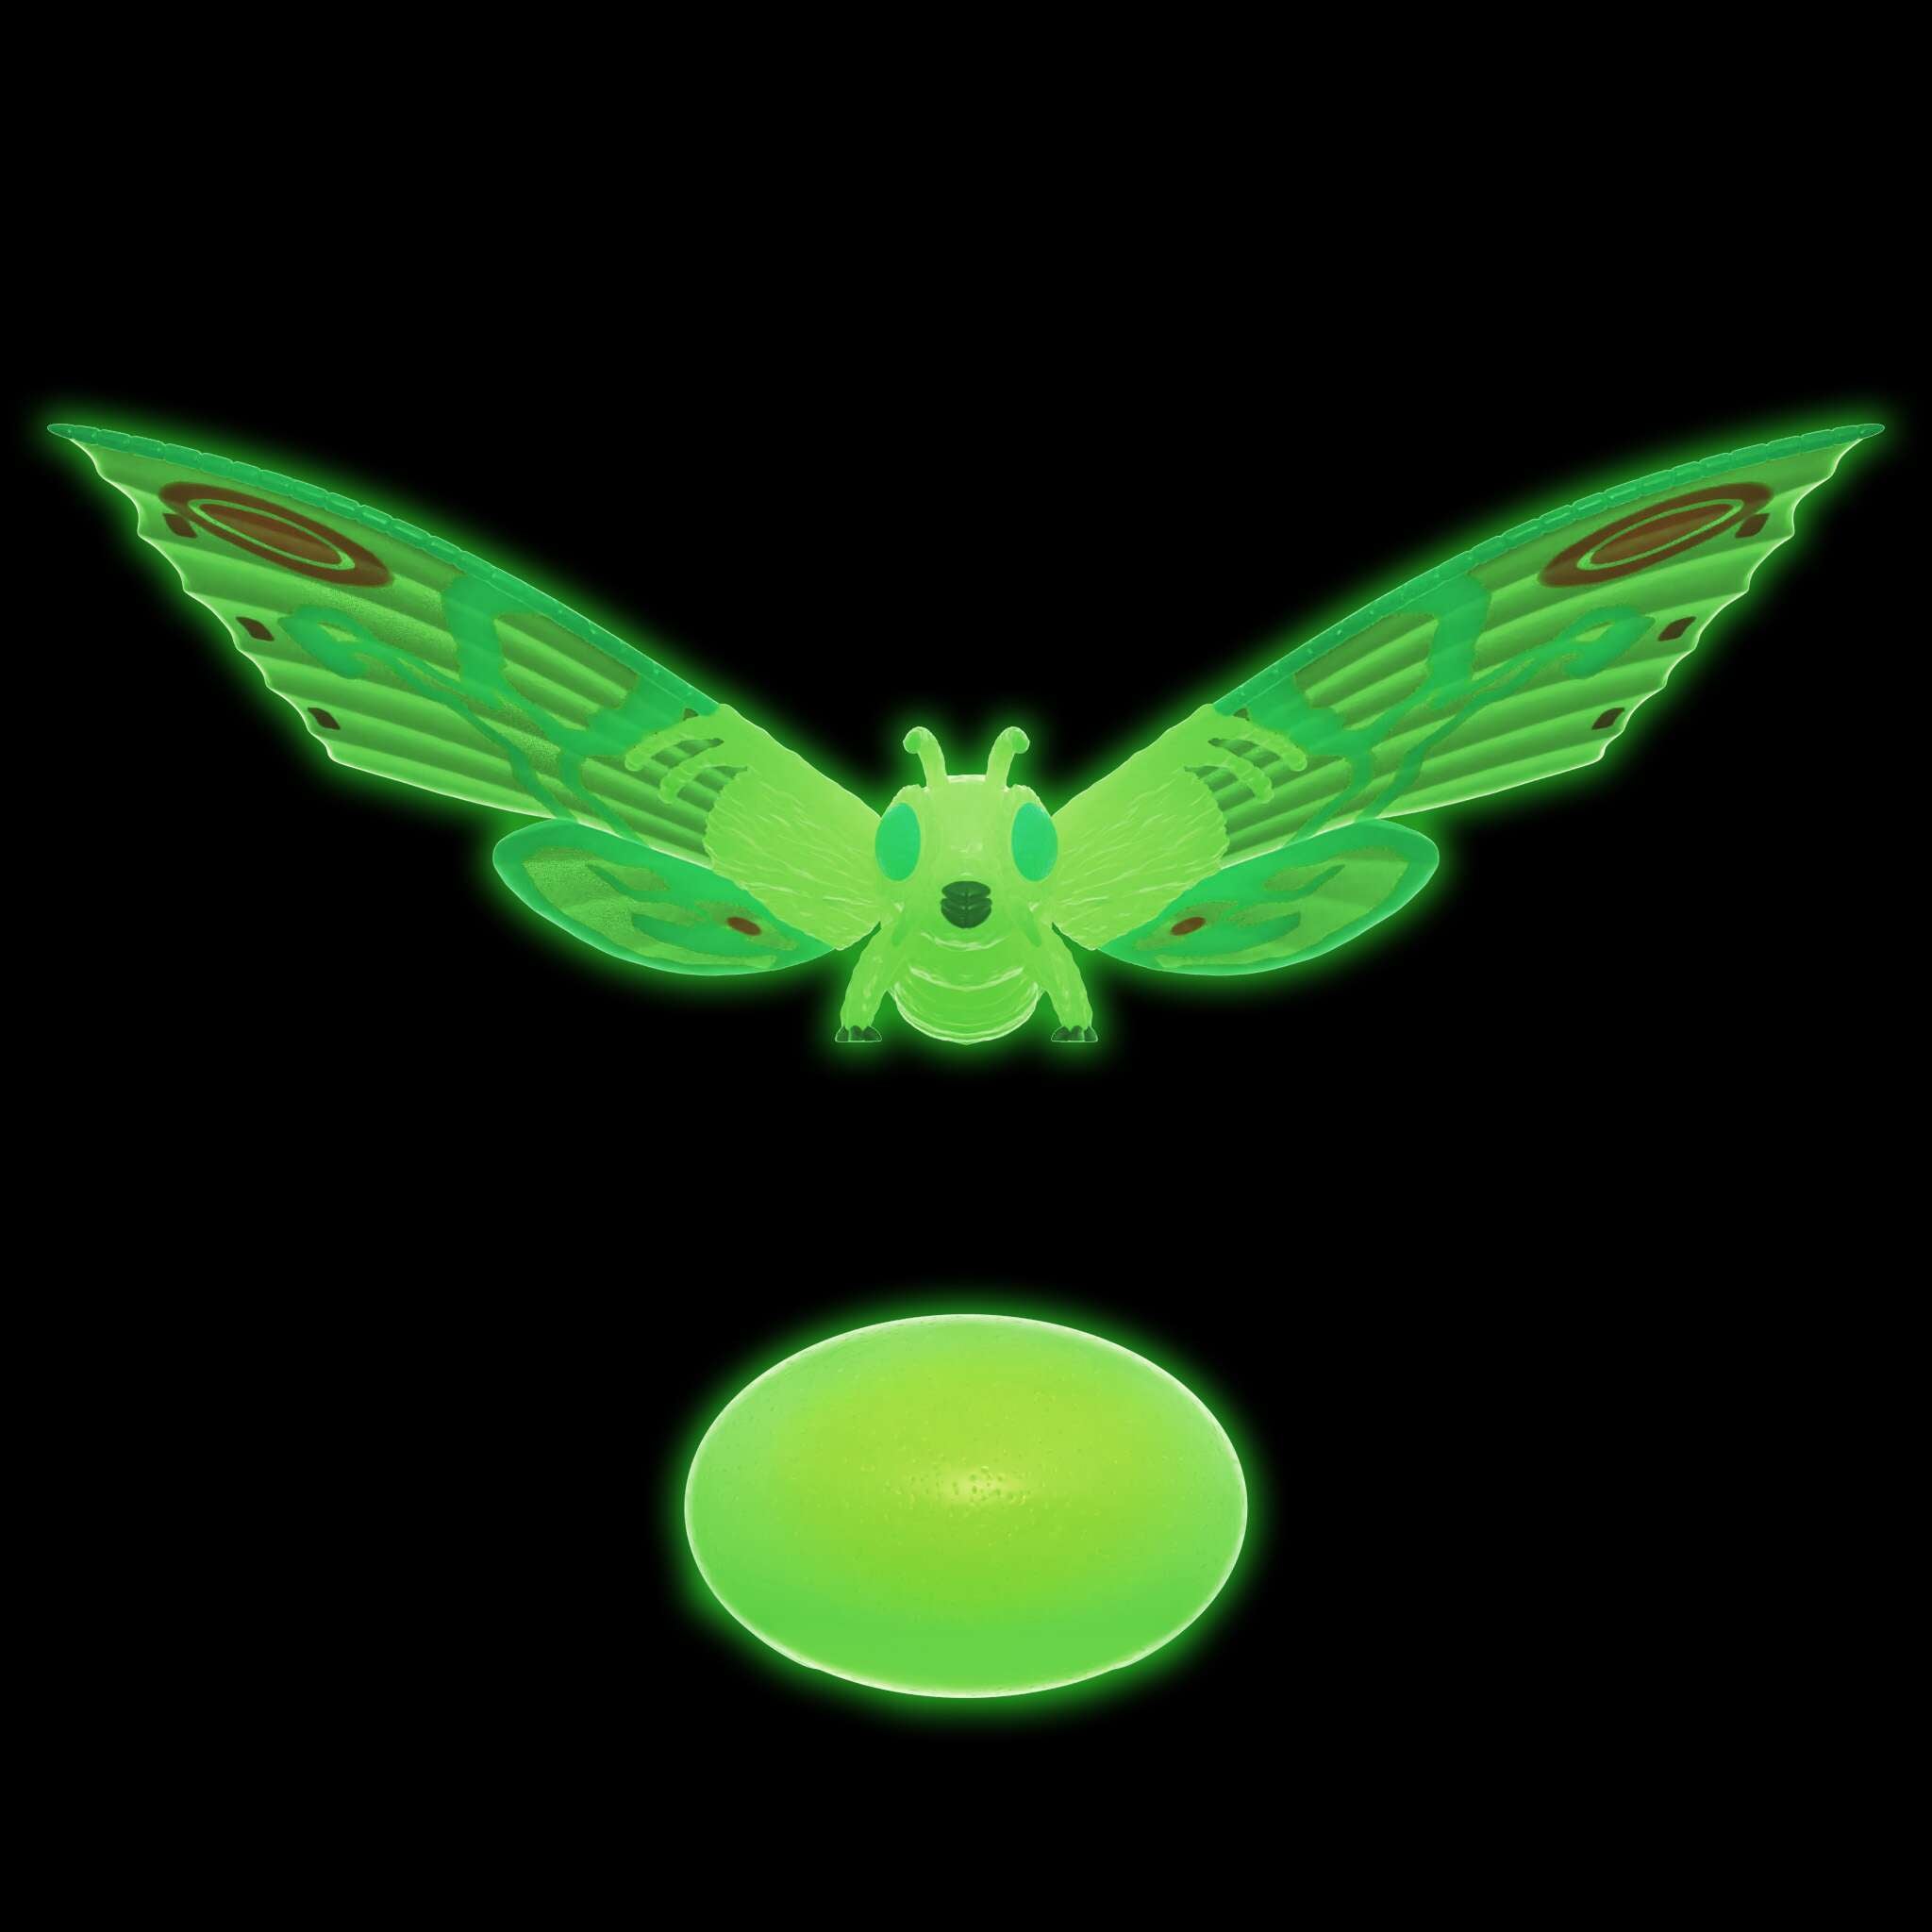 Toho ReAction Glow Wave 1 - Mothra